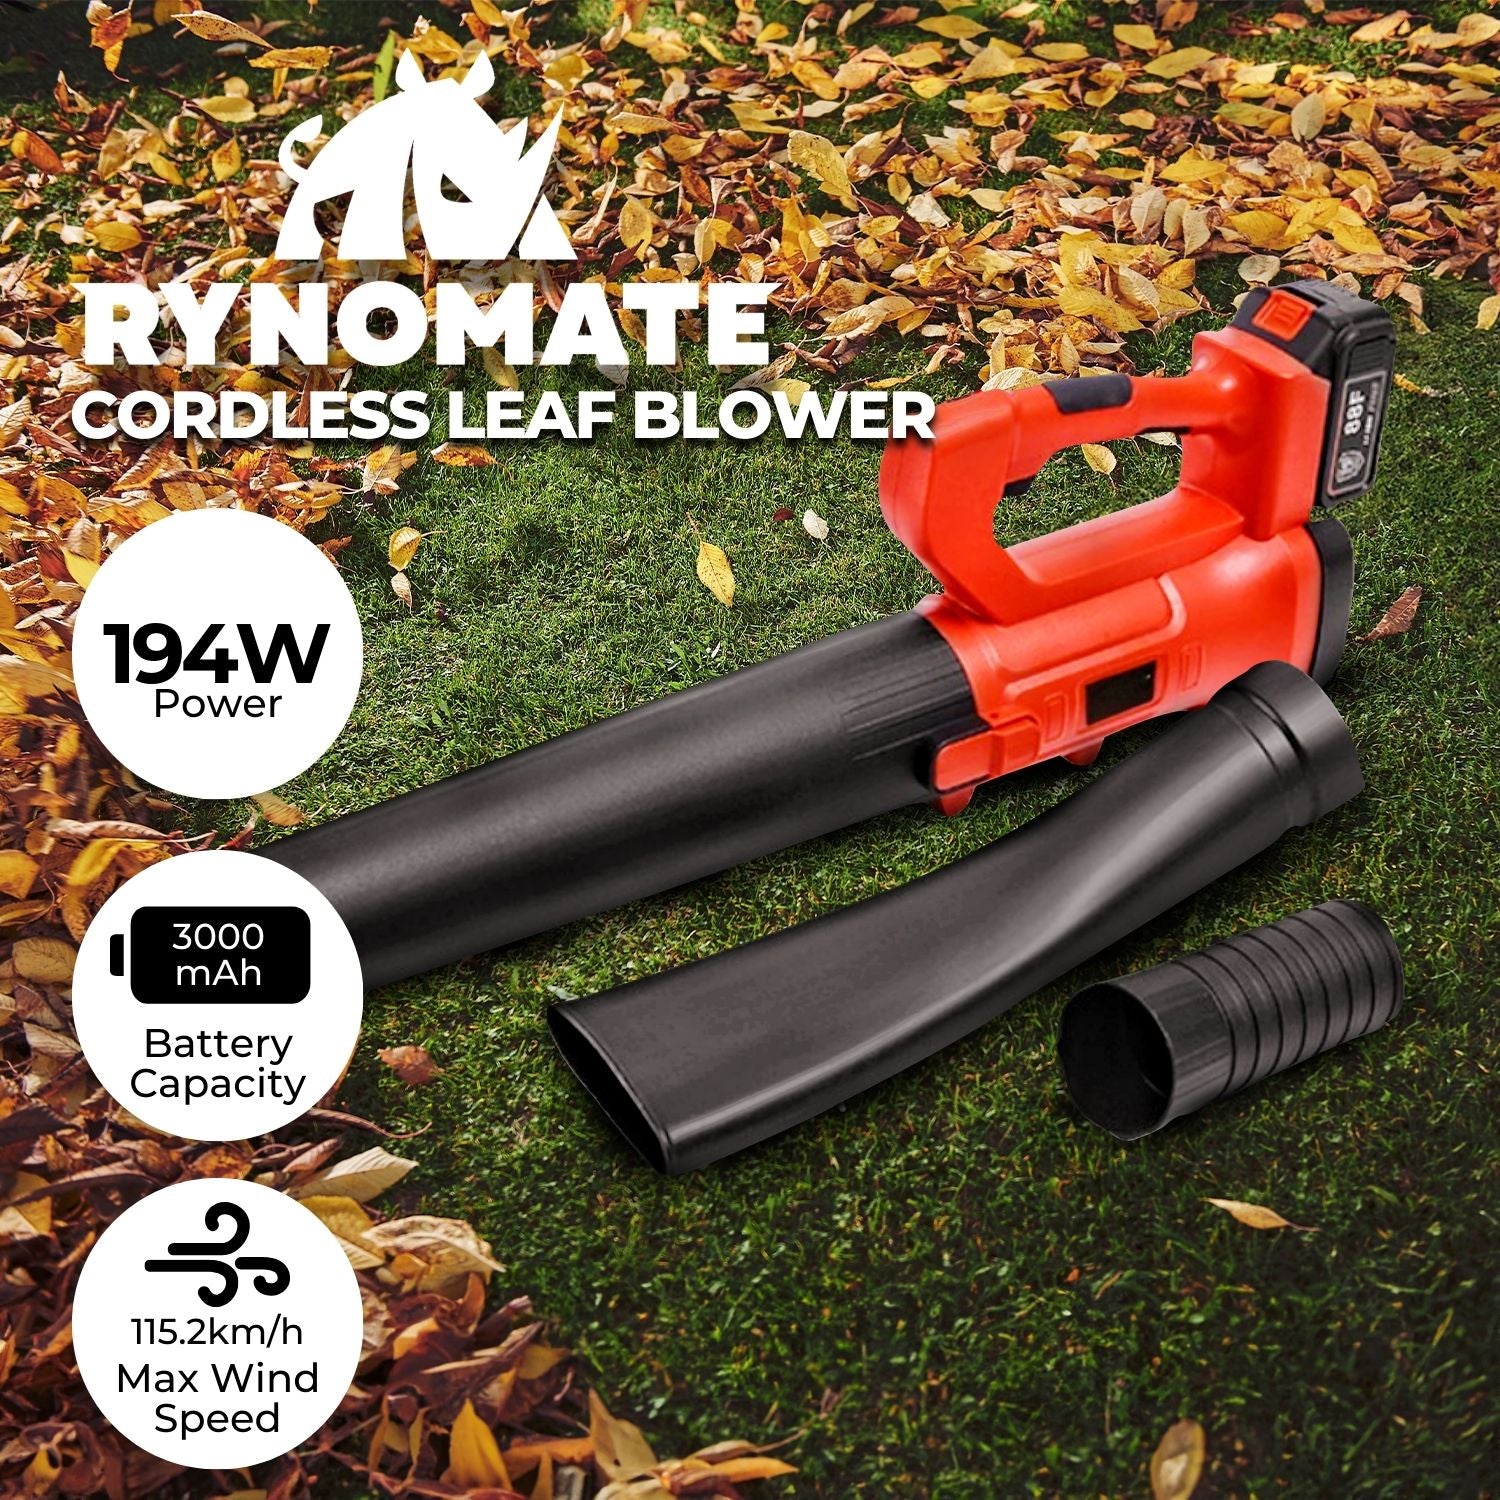 Rynomate | Cordless Leaf Blower with 18v Lithium Battery